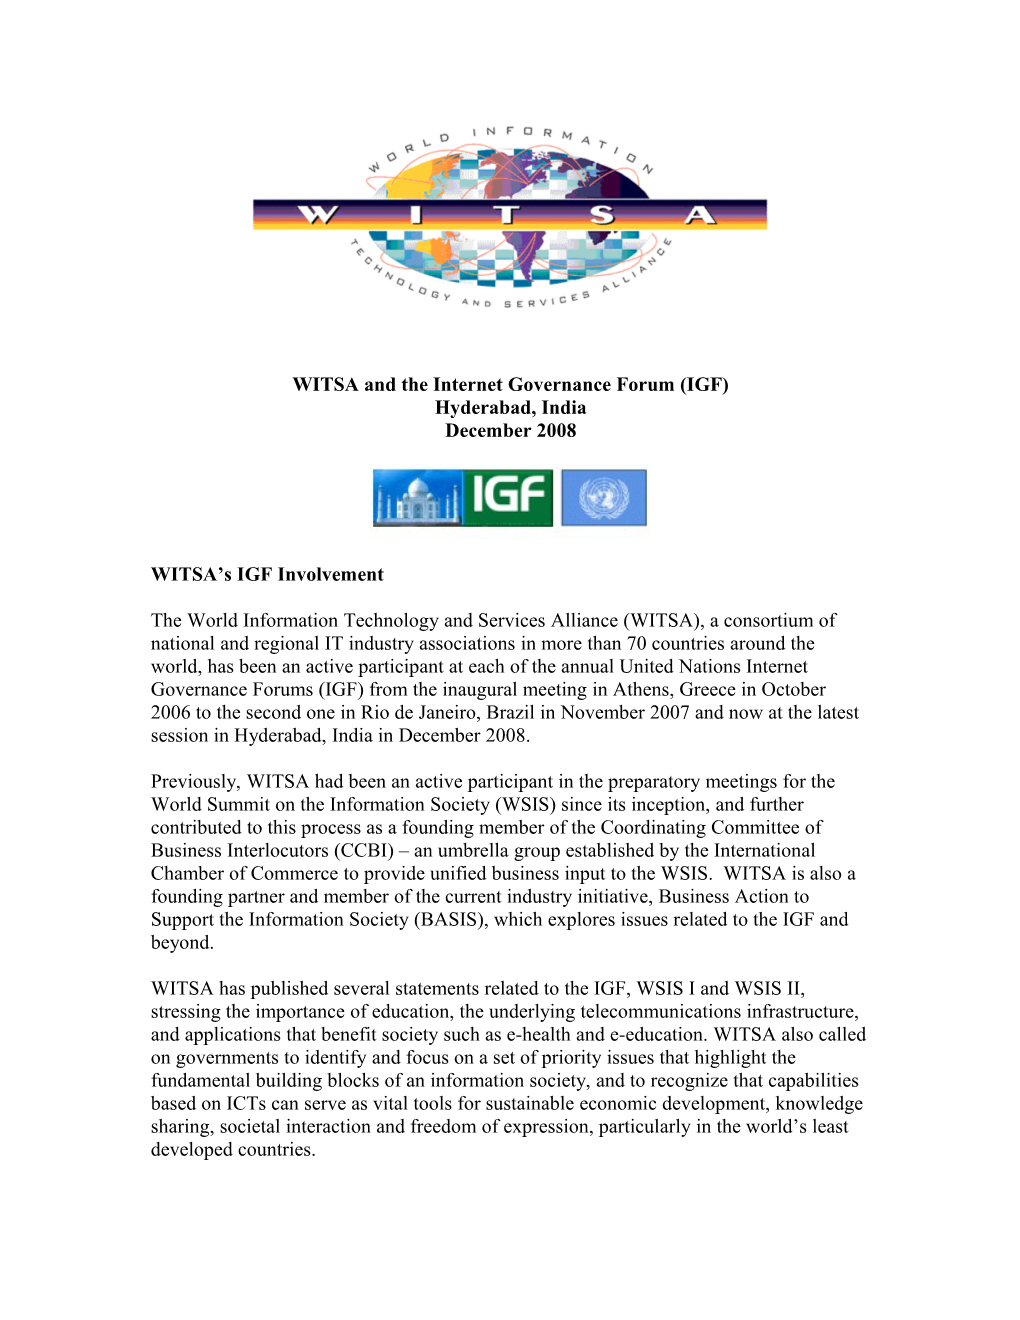 WITSA and the Internet Governance Forum (IGF)